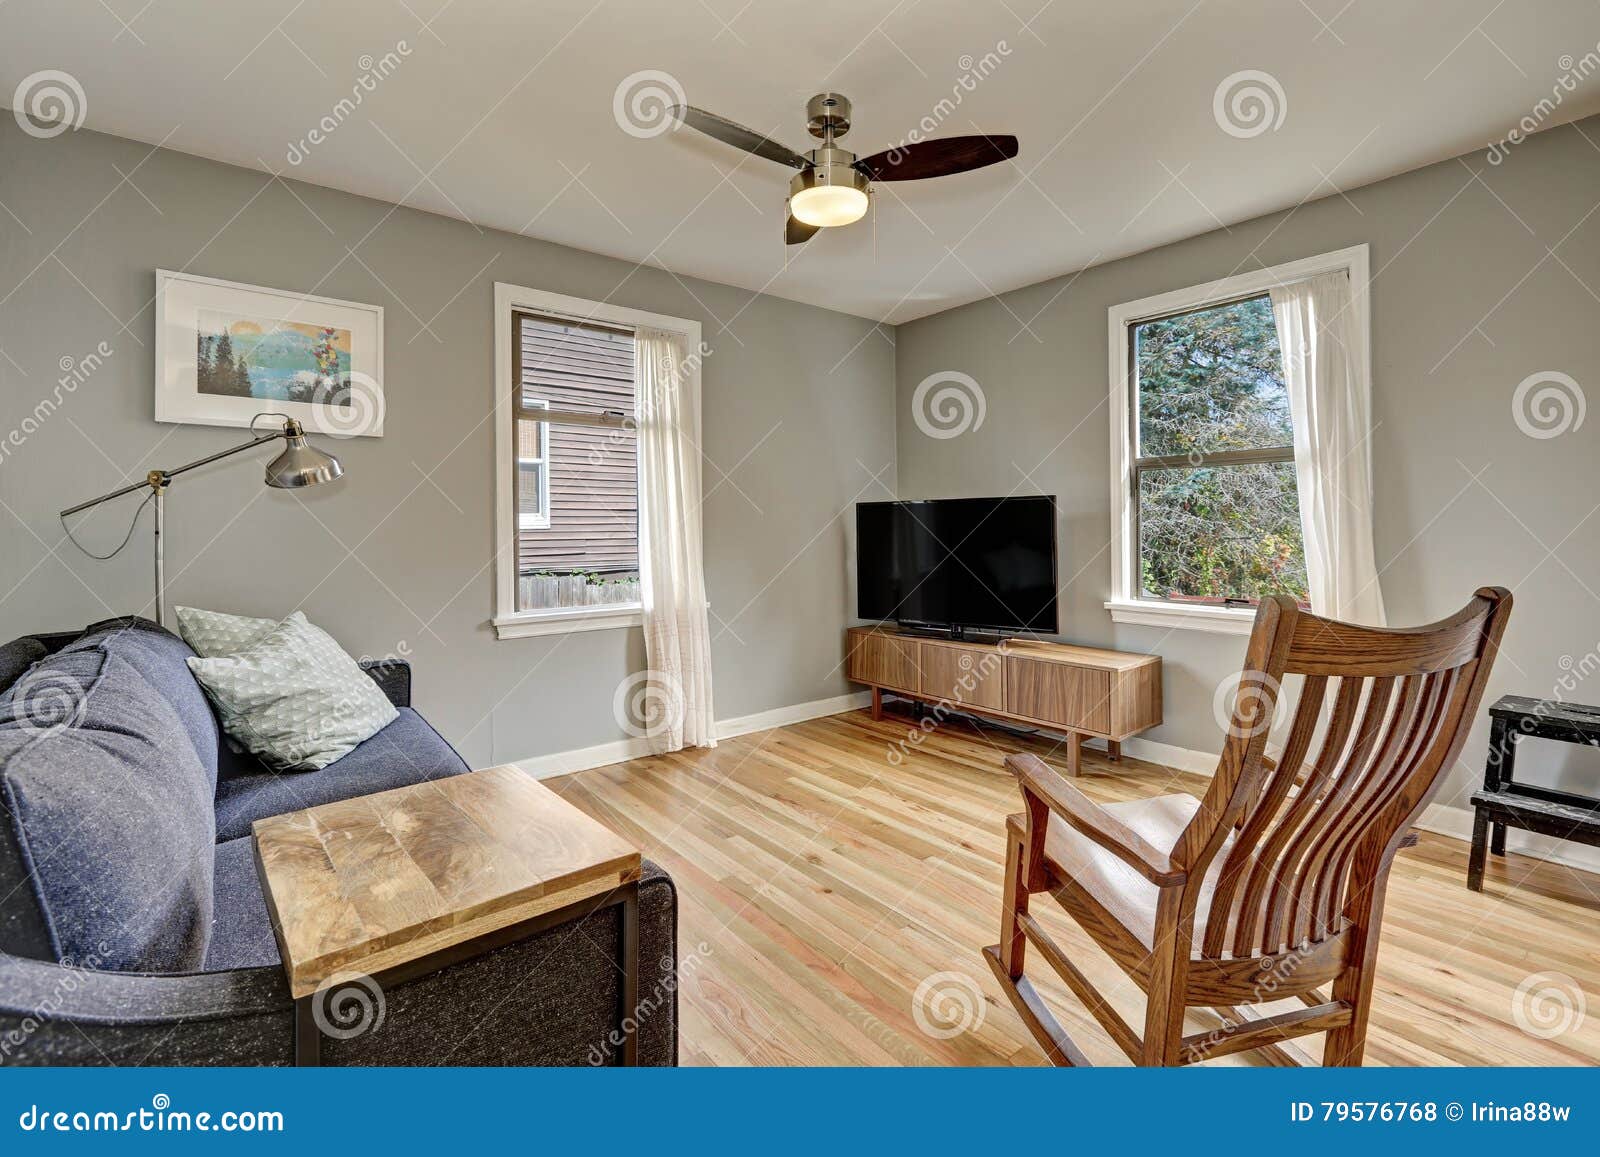 Simplistic Living Room Interior With Light Hardwood Floors Stock